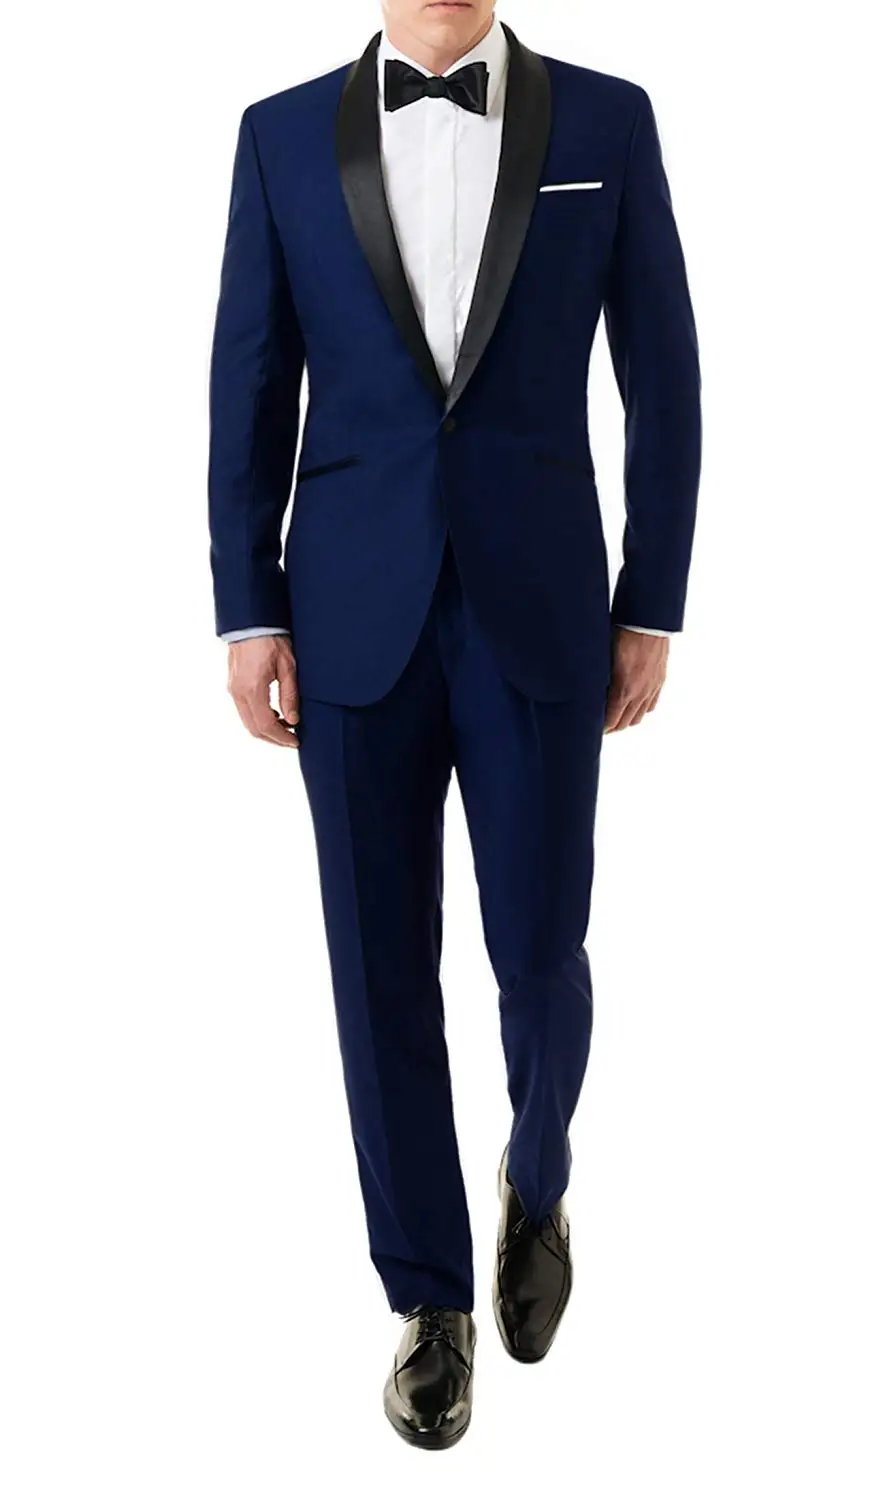 Cheap Blue Sky Suit, find Blue Sky Suit deals on line at Alibaba.com